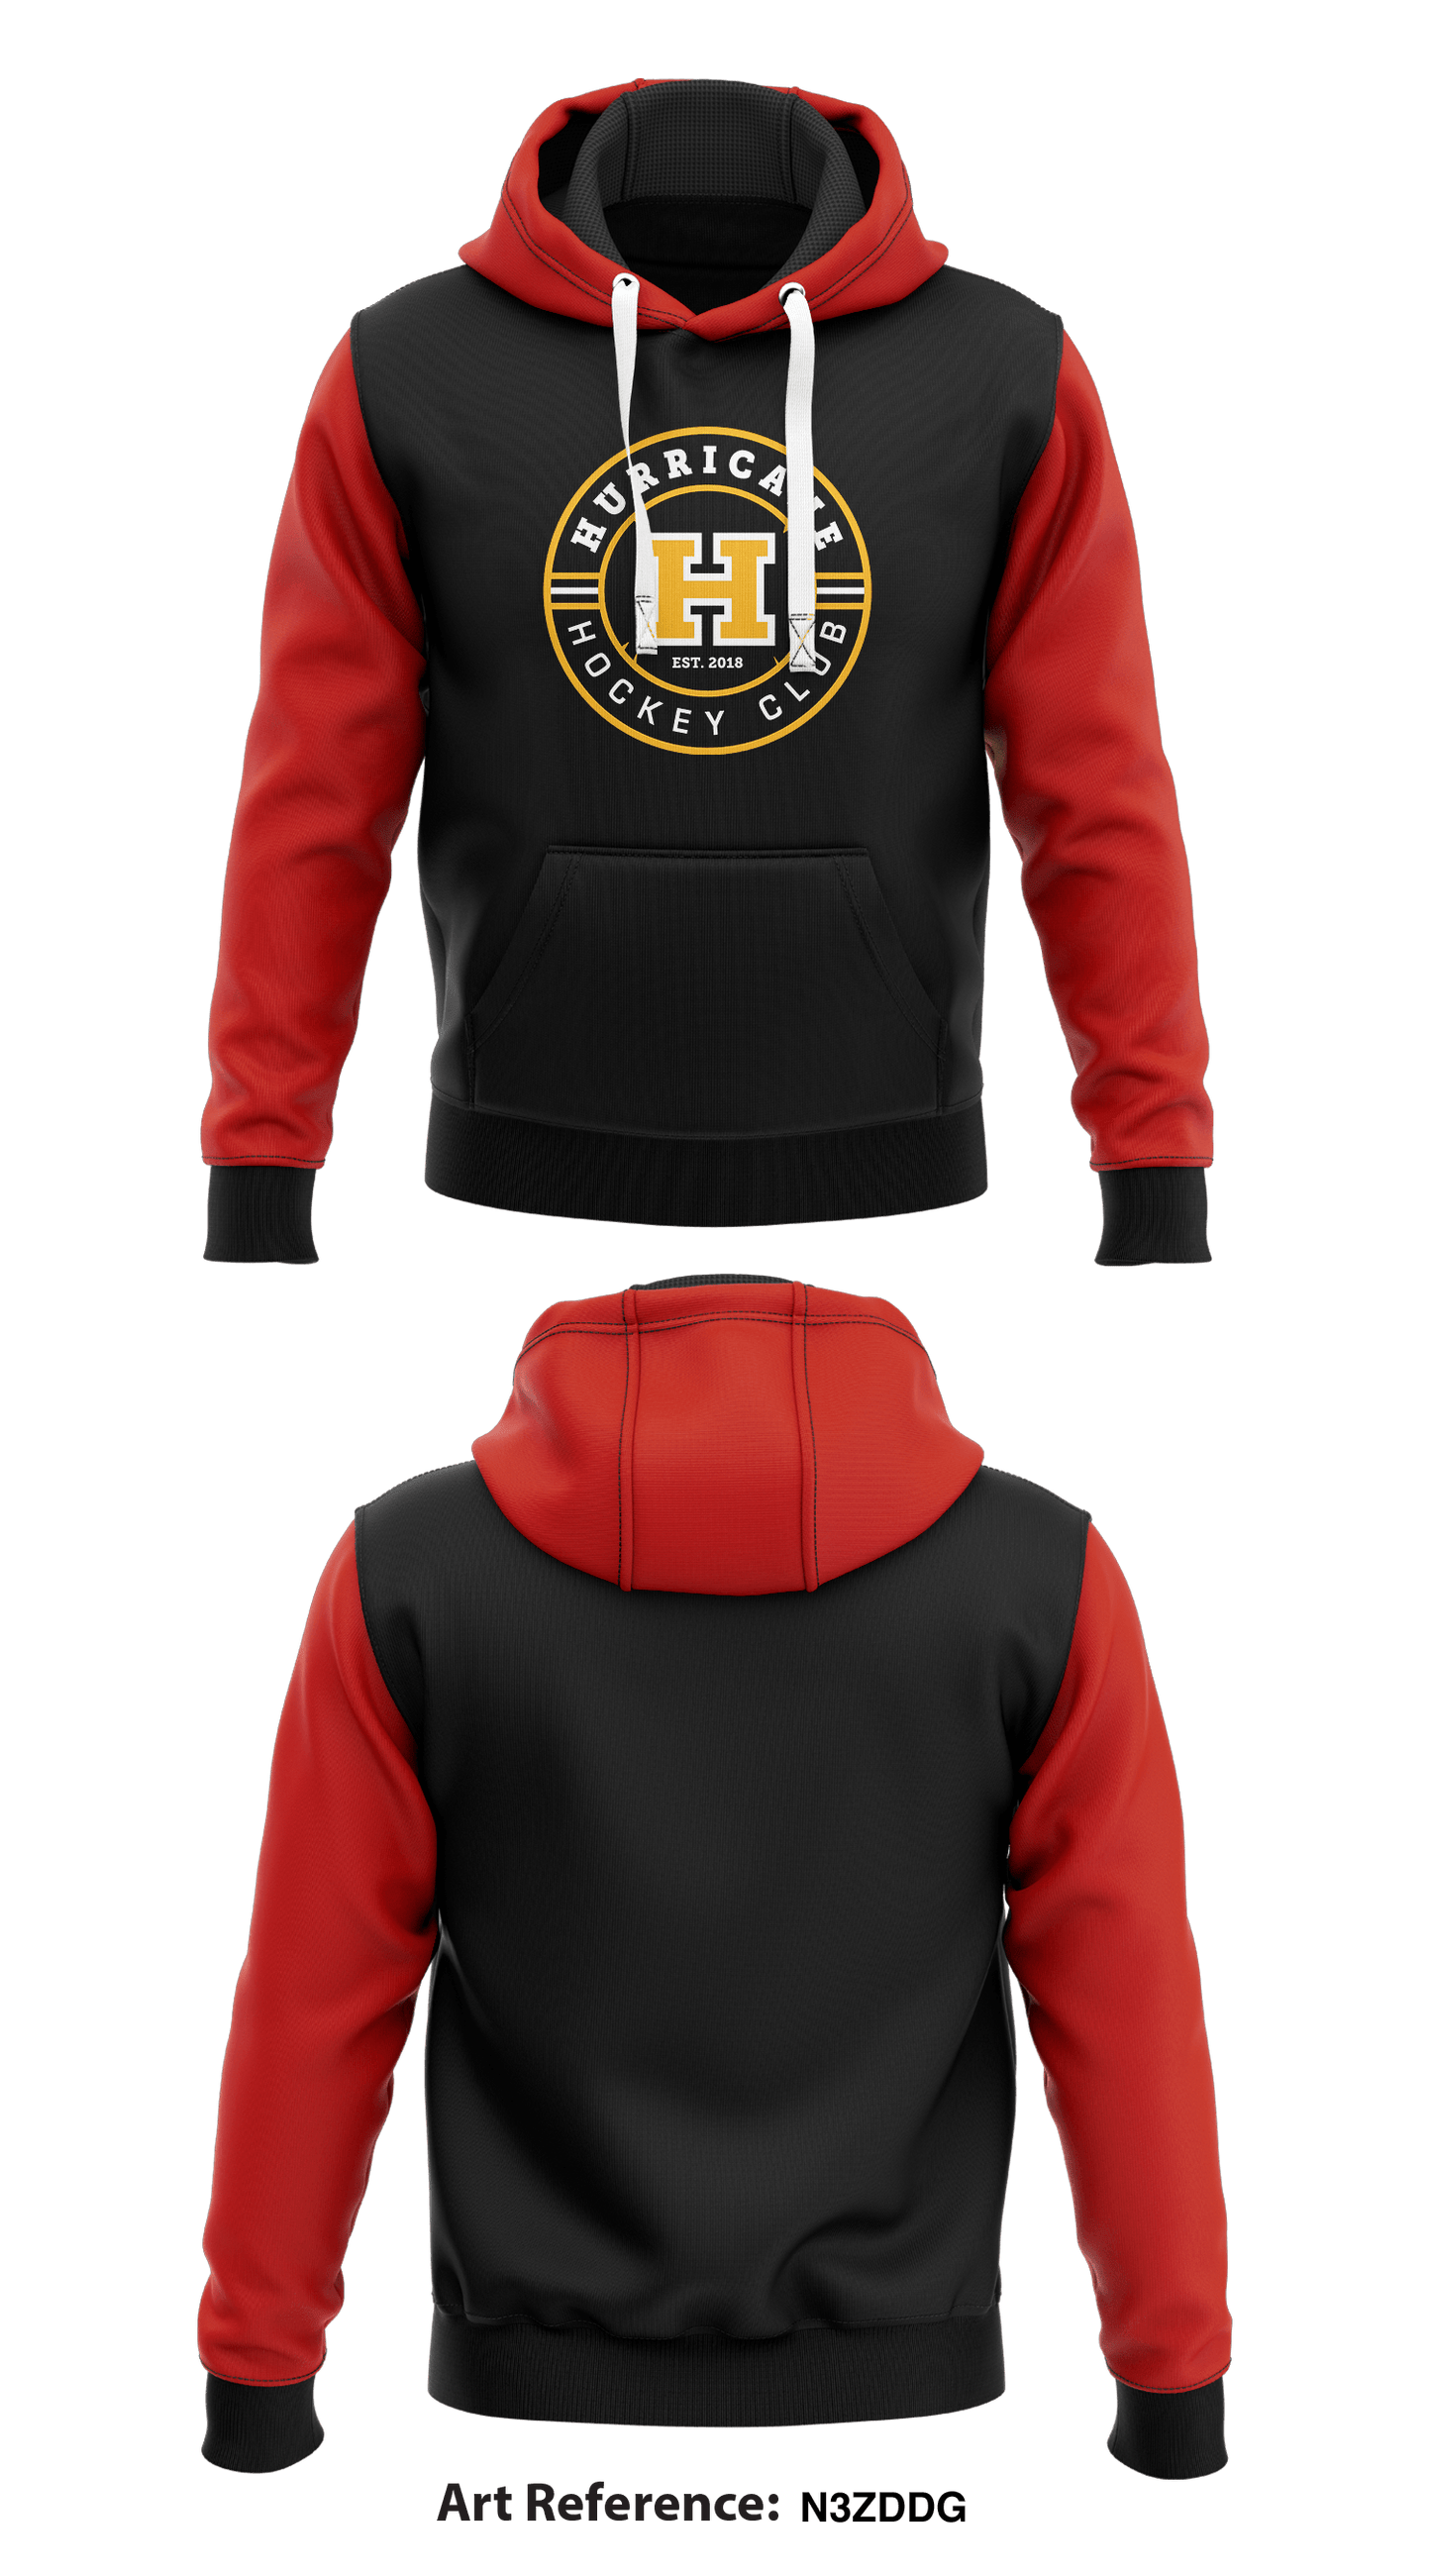 Hurricane Ringette Store 1 Core Men's Hooded Performance Sweatshirt - n3zDDg